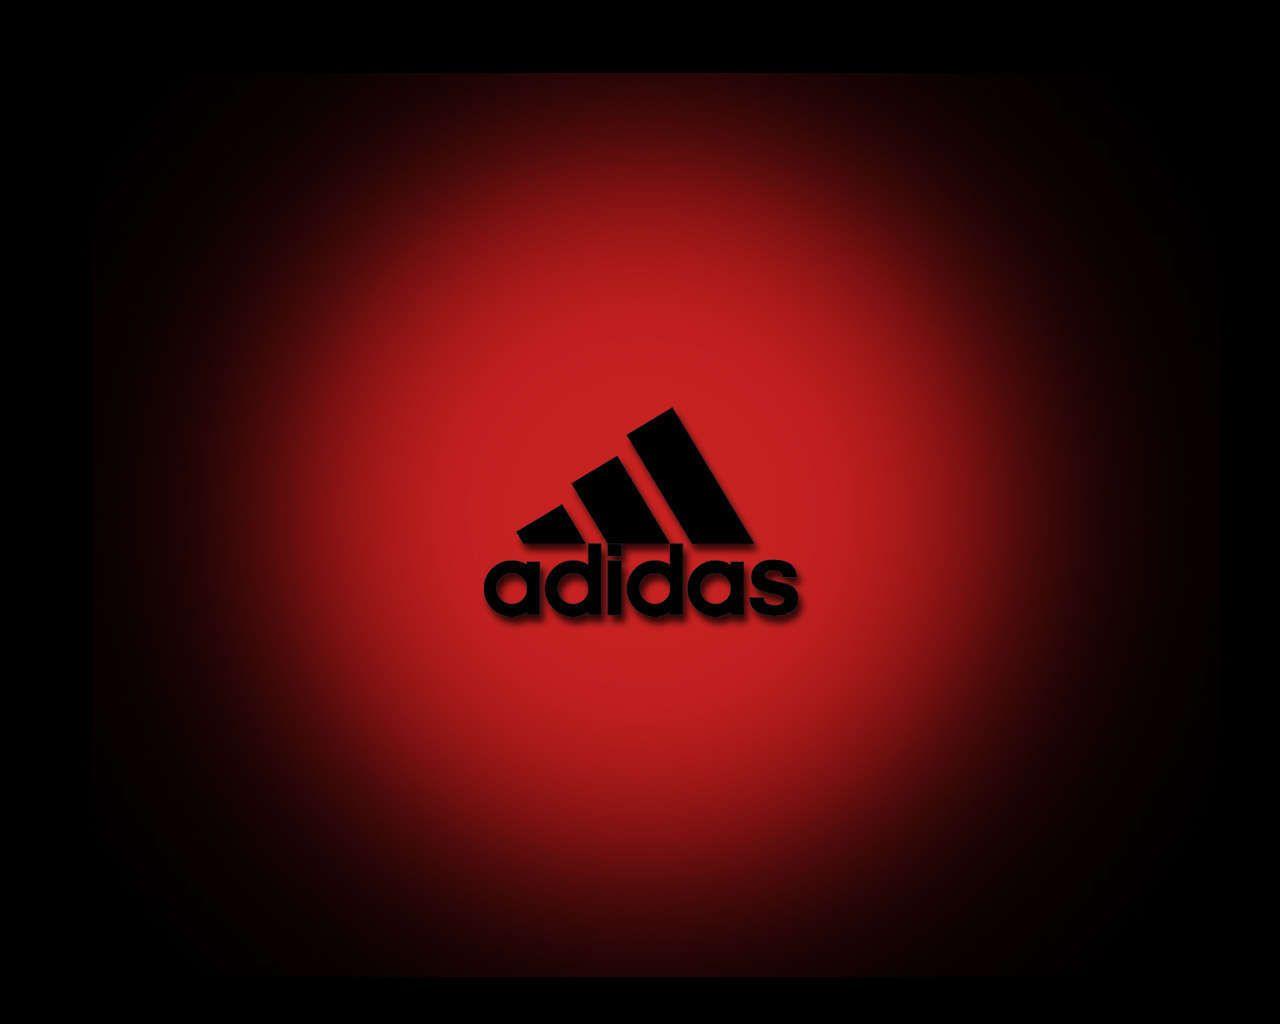 Adidas Logo Wallpaper, HDQ Adidas Logo Image Collection